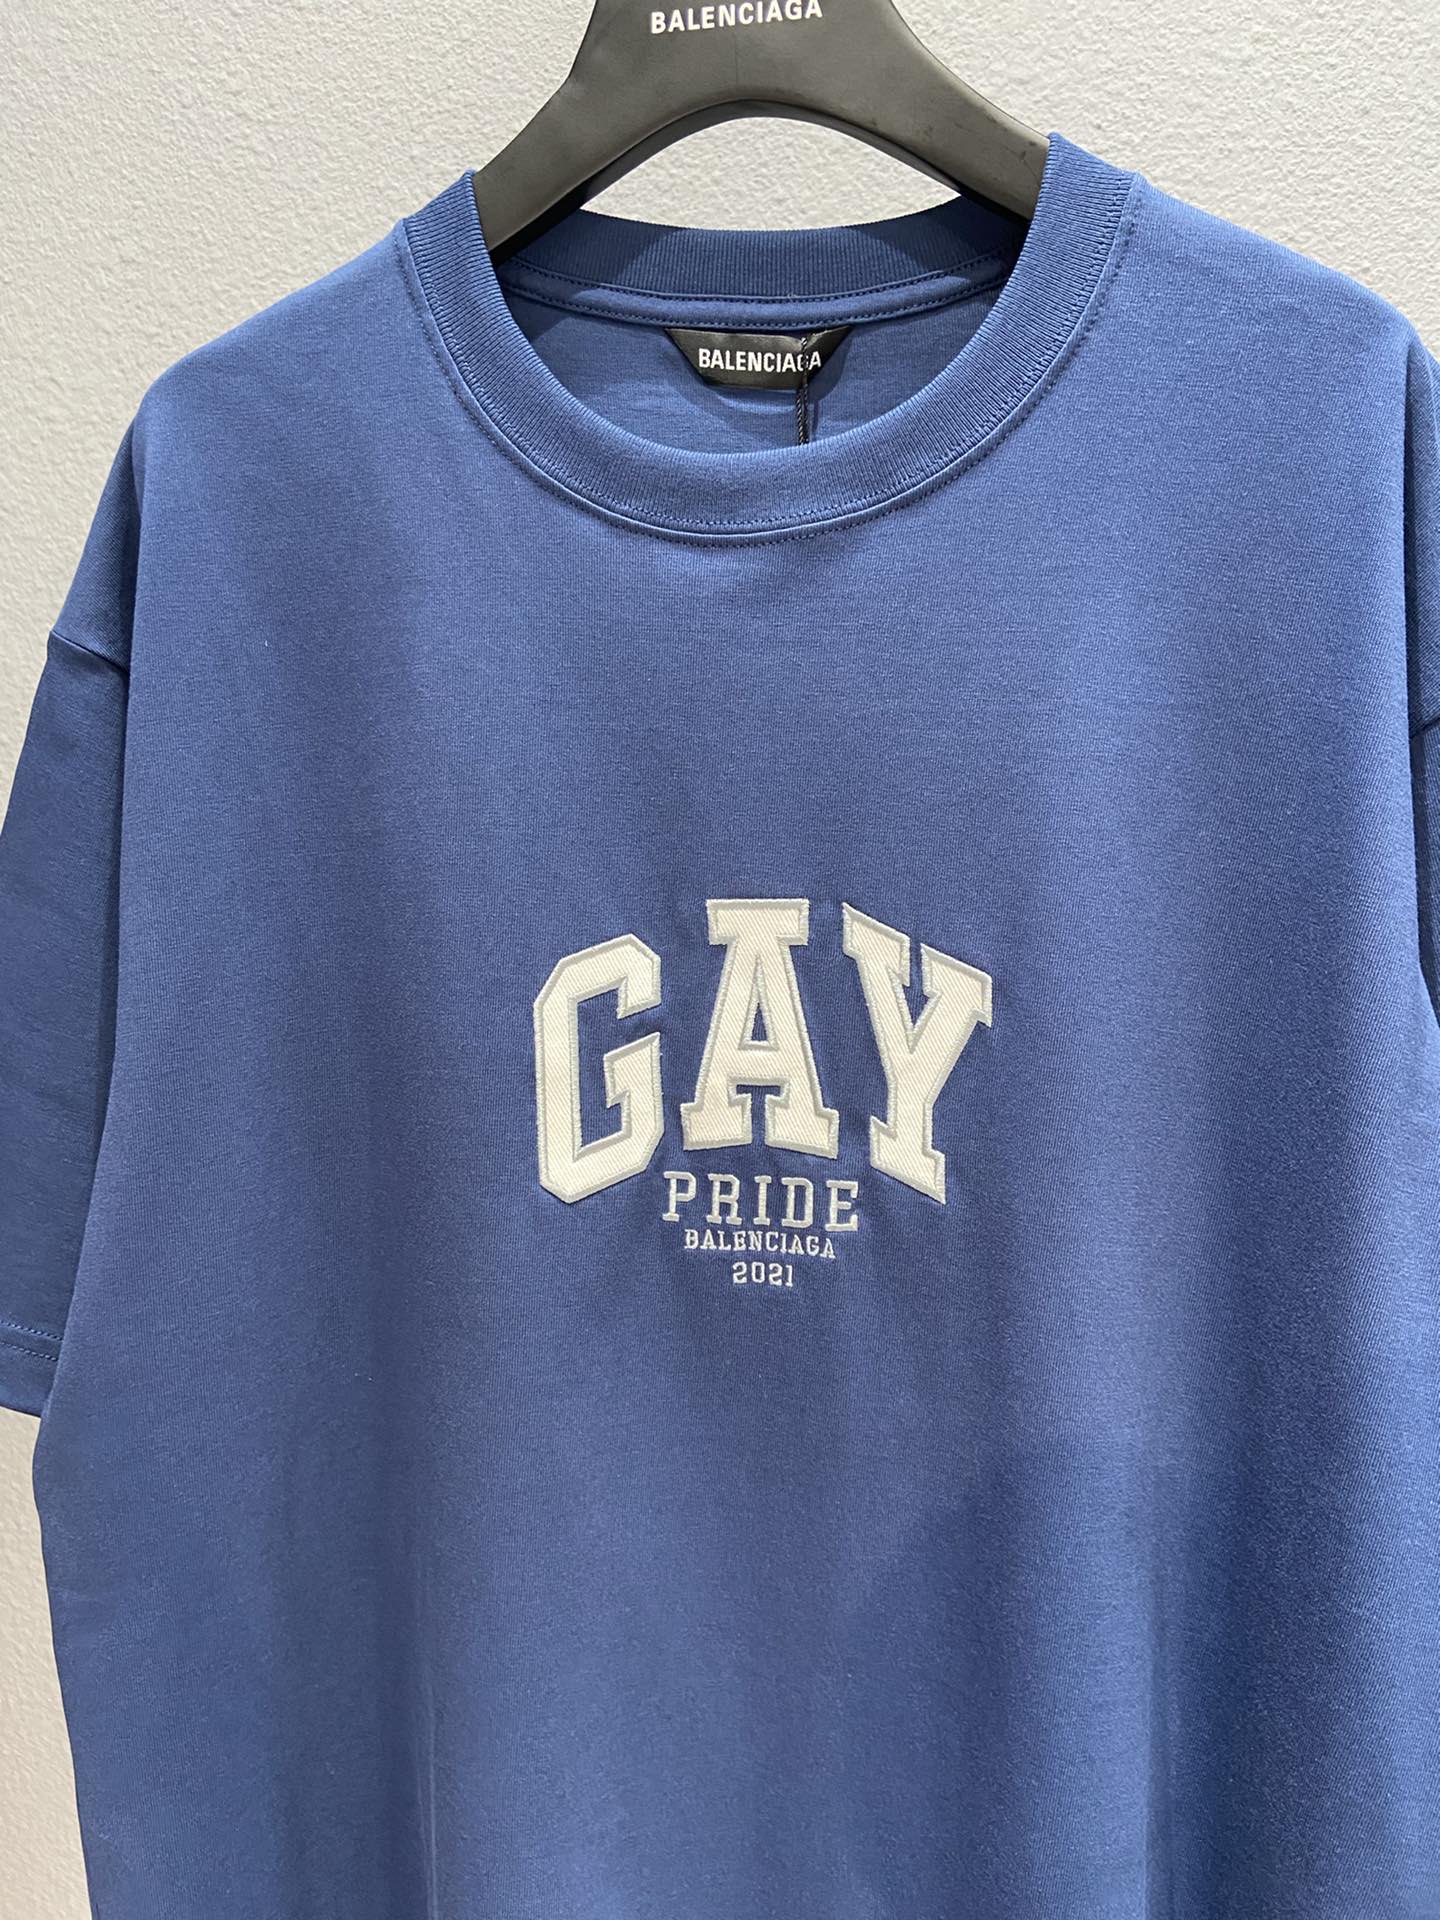 Balenciaga T-Shirt Pride Boxy